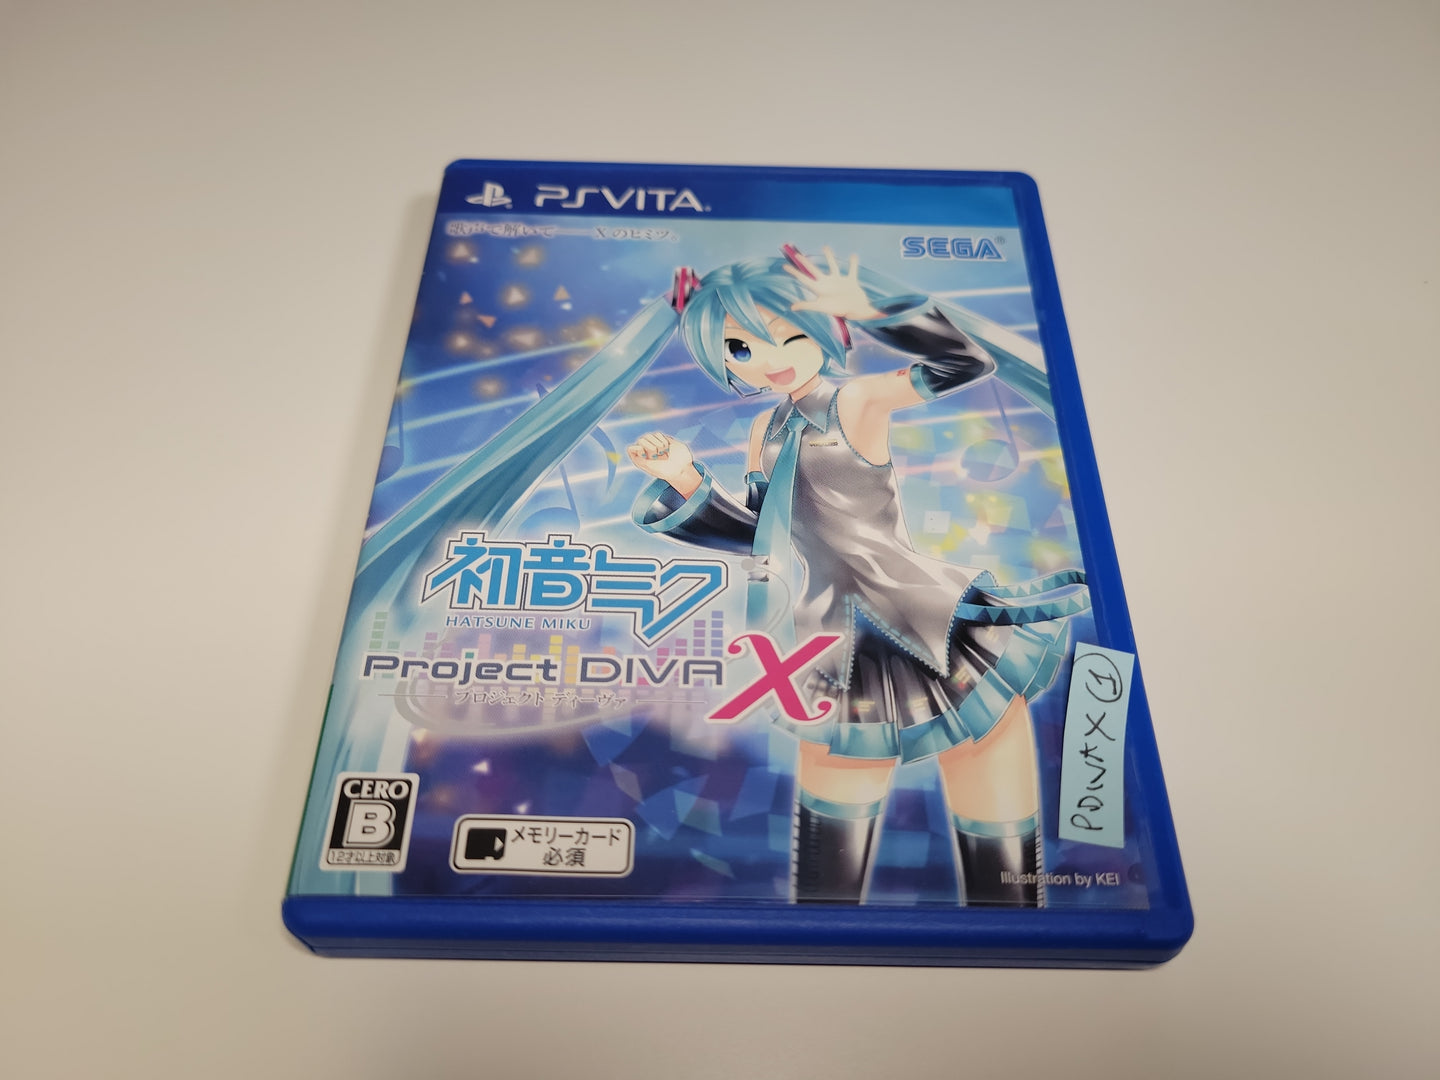 rocco - Hatsune Miku: Project DIVA X - Sony PSV Playstation Vita